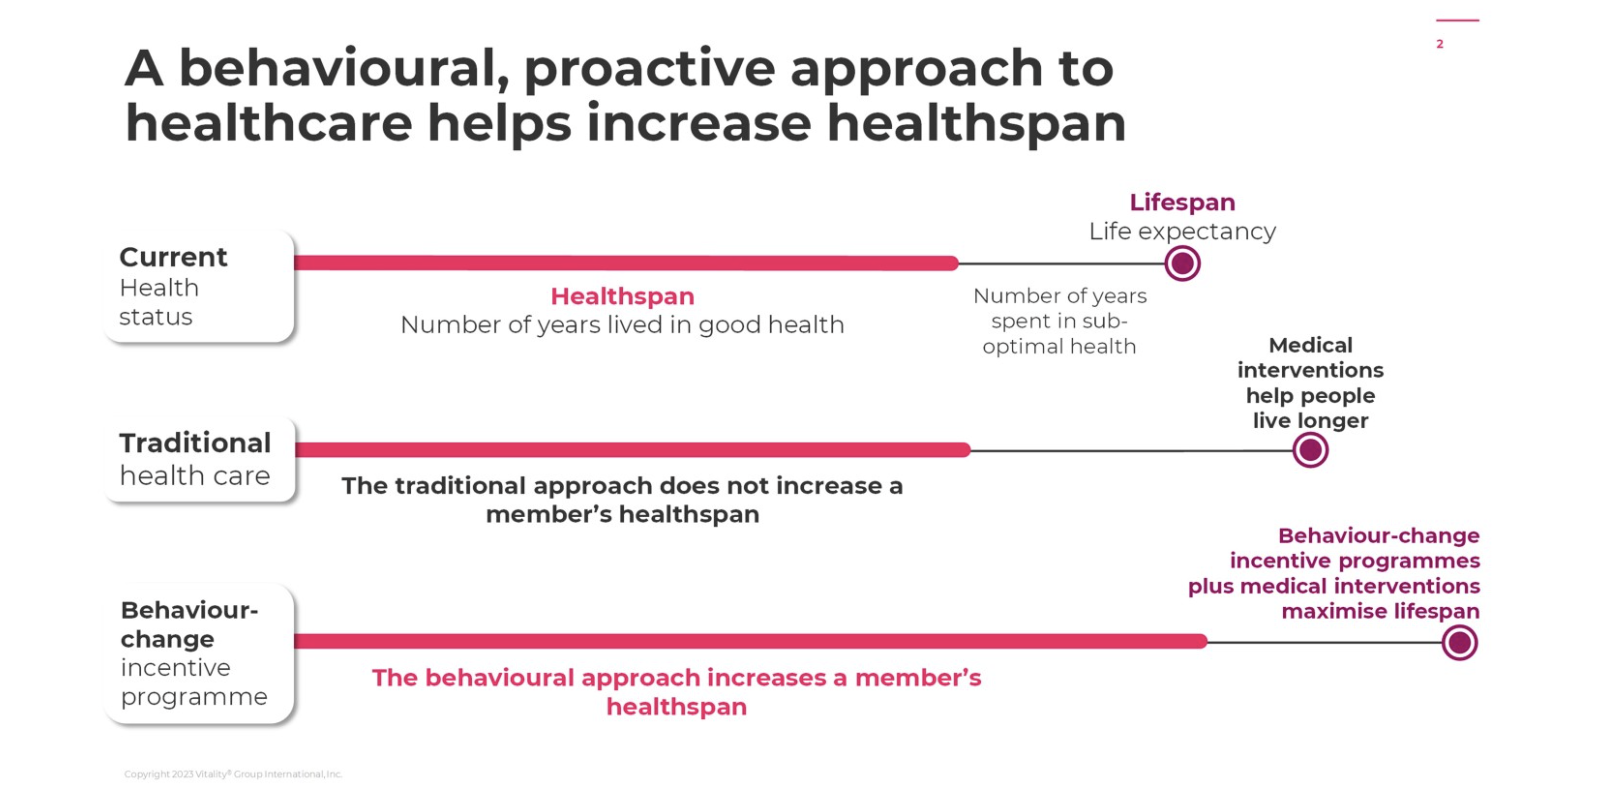 A behavioural, proactive approach to healthcare helps increase healthspan